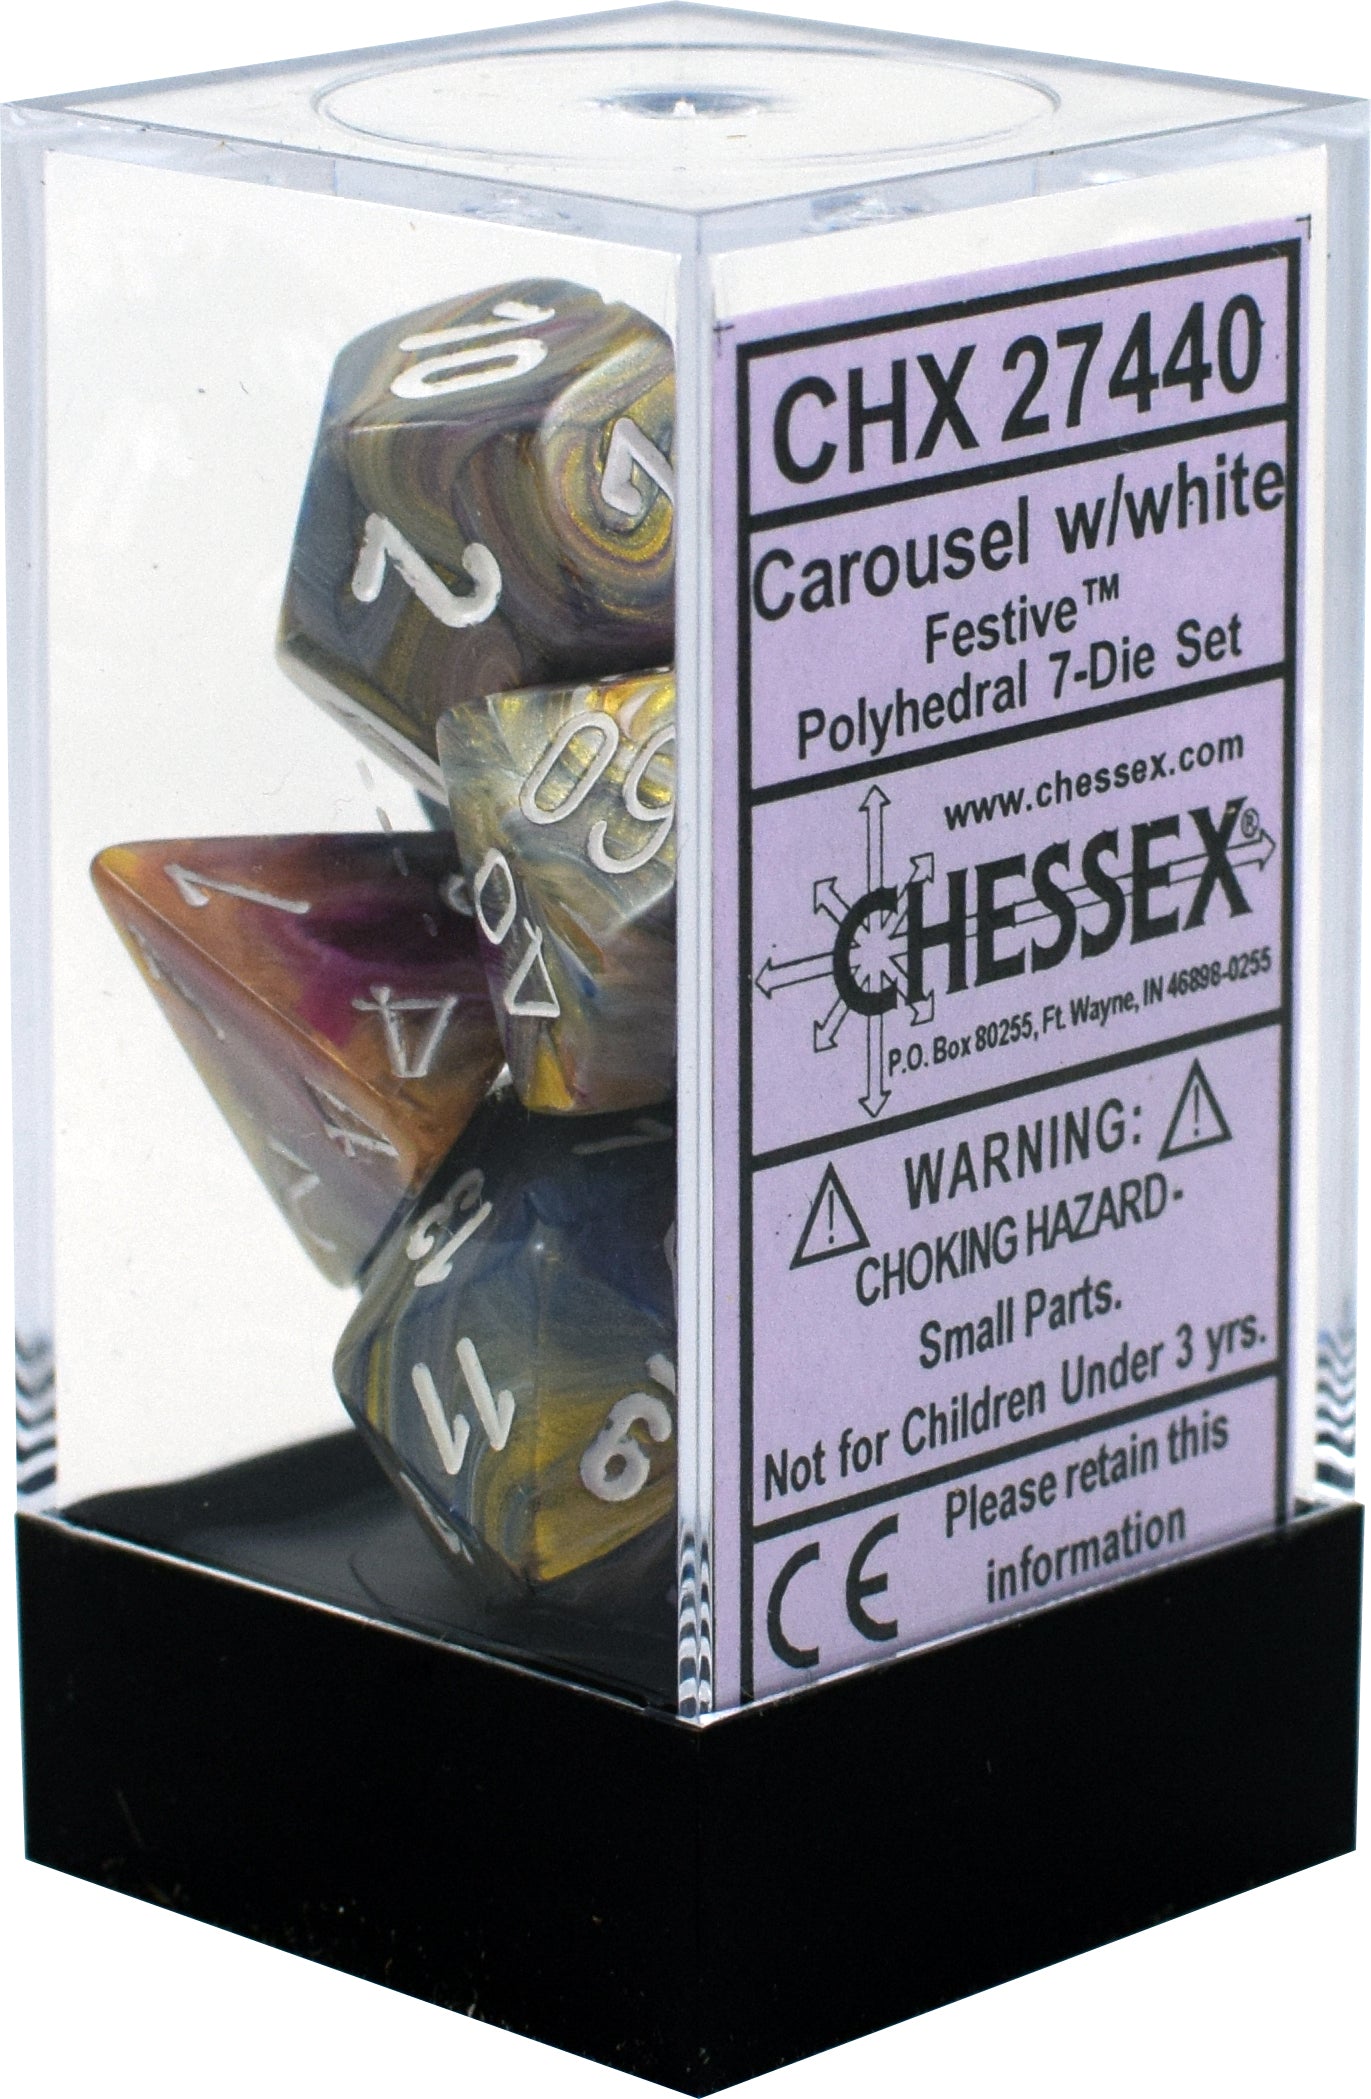 CHESSEX FESTIVE 7-DIE SET CAROUSEL/WHITE (CHX27440) | Eastridge Sports Cards & Games